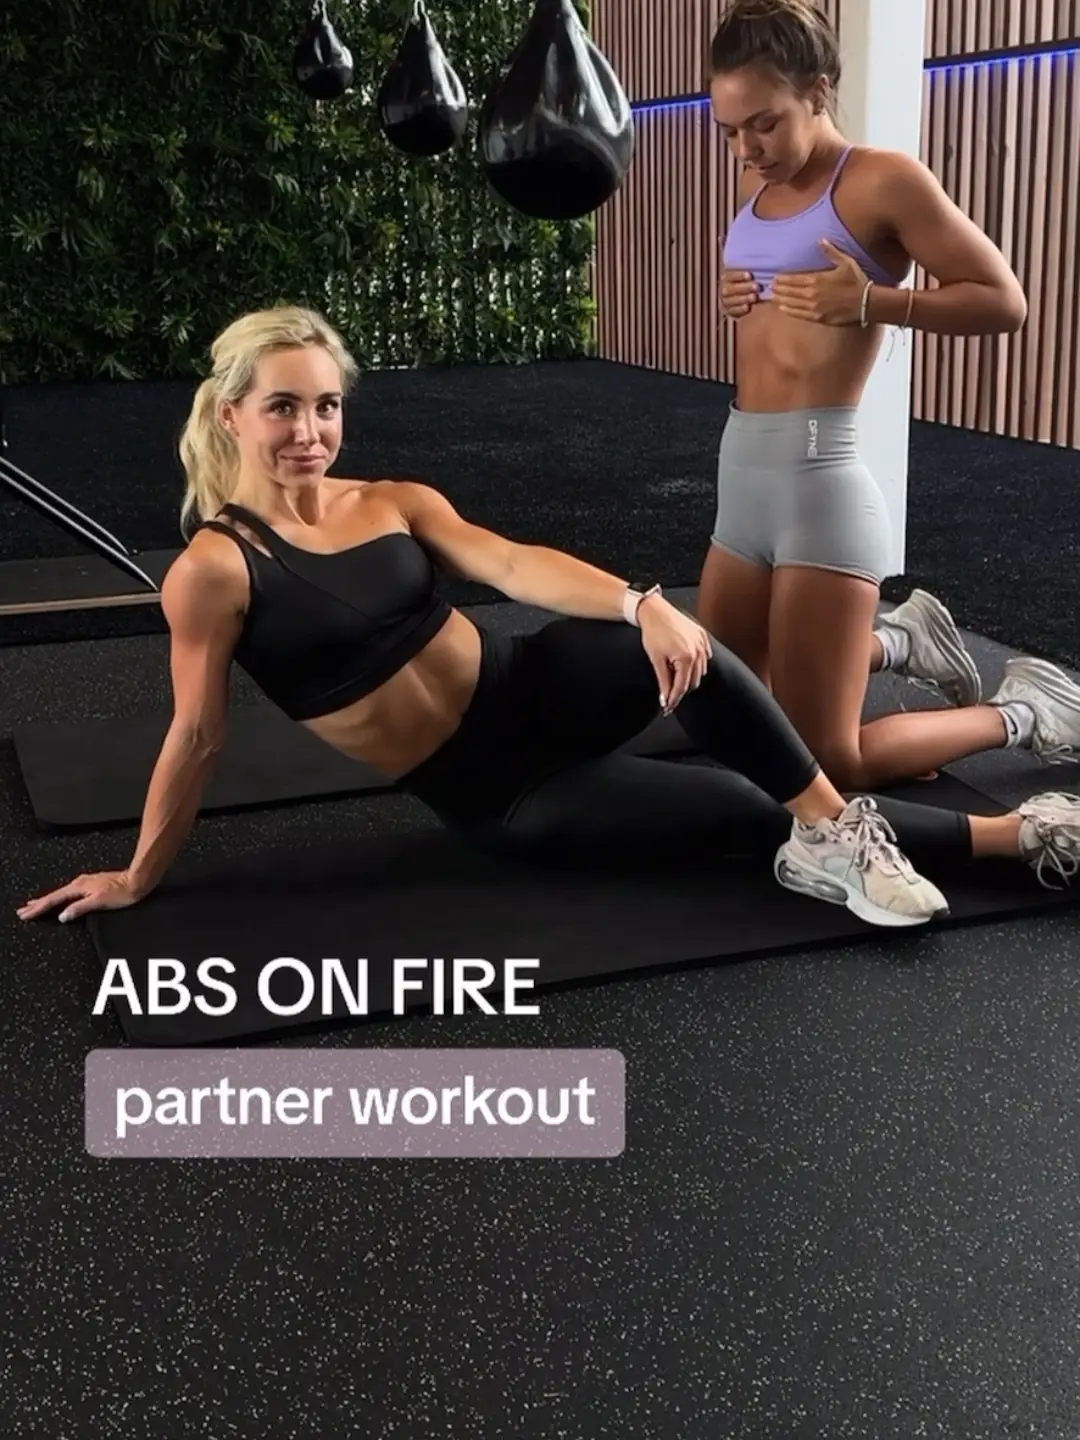 PARTNER WORKOUT SESSION  Partner workout, Workout videos, Abs workout